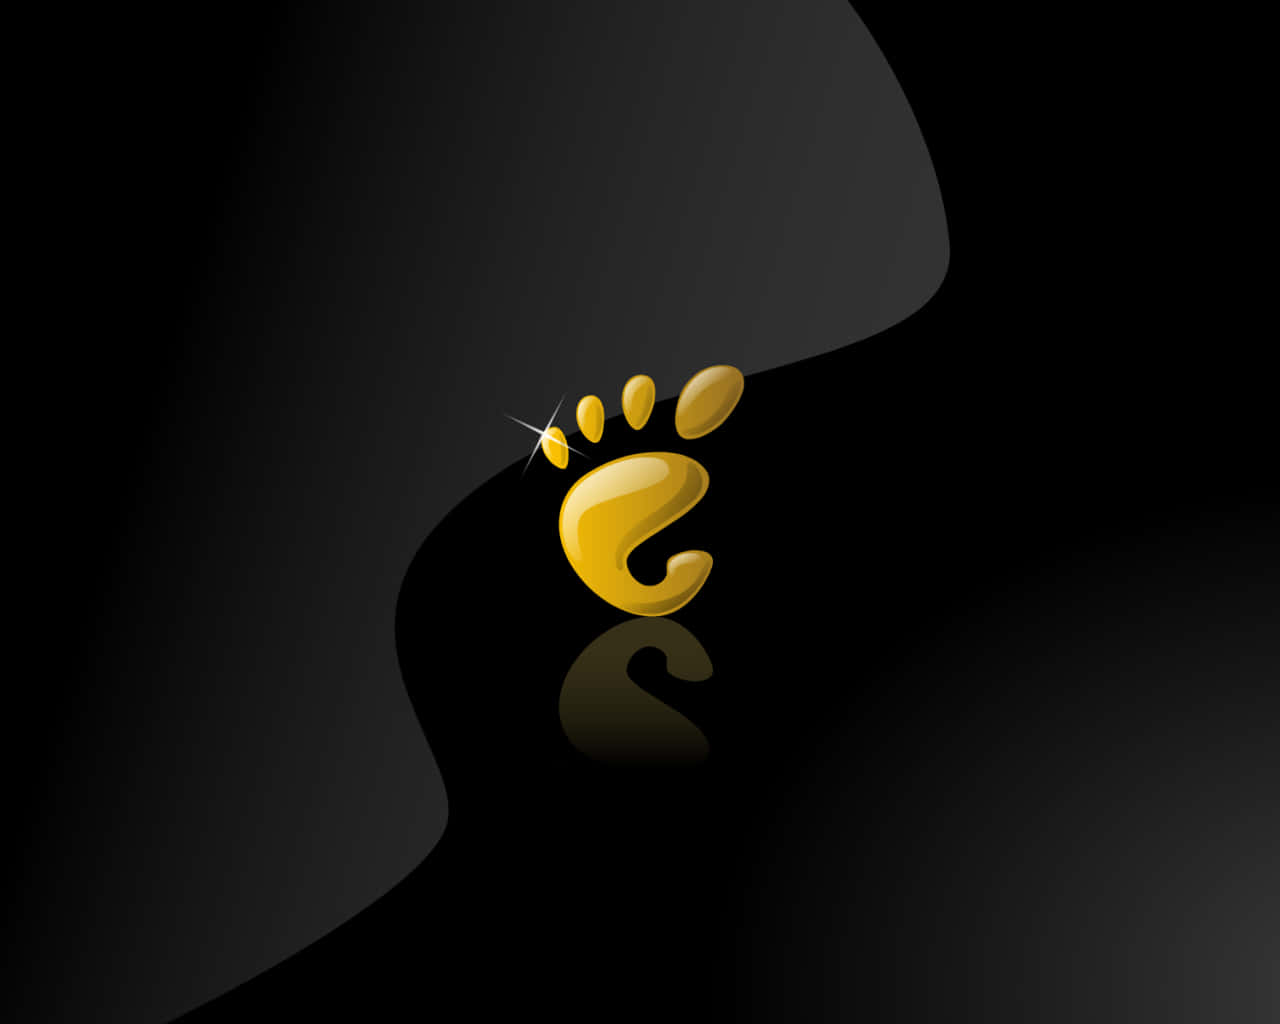 A Golden Foot Logo On A Black Background